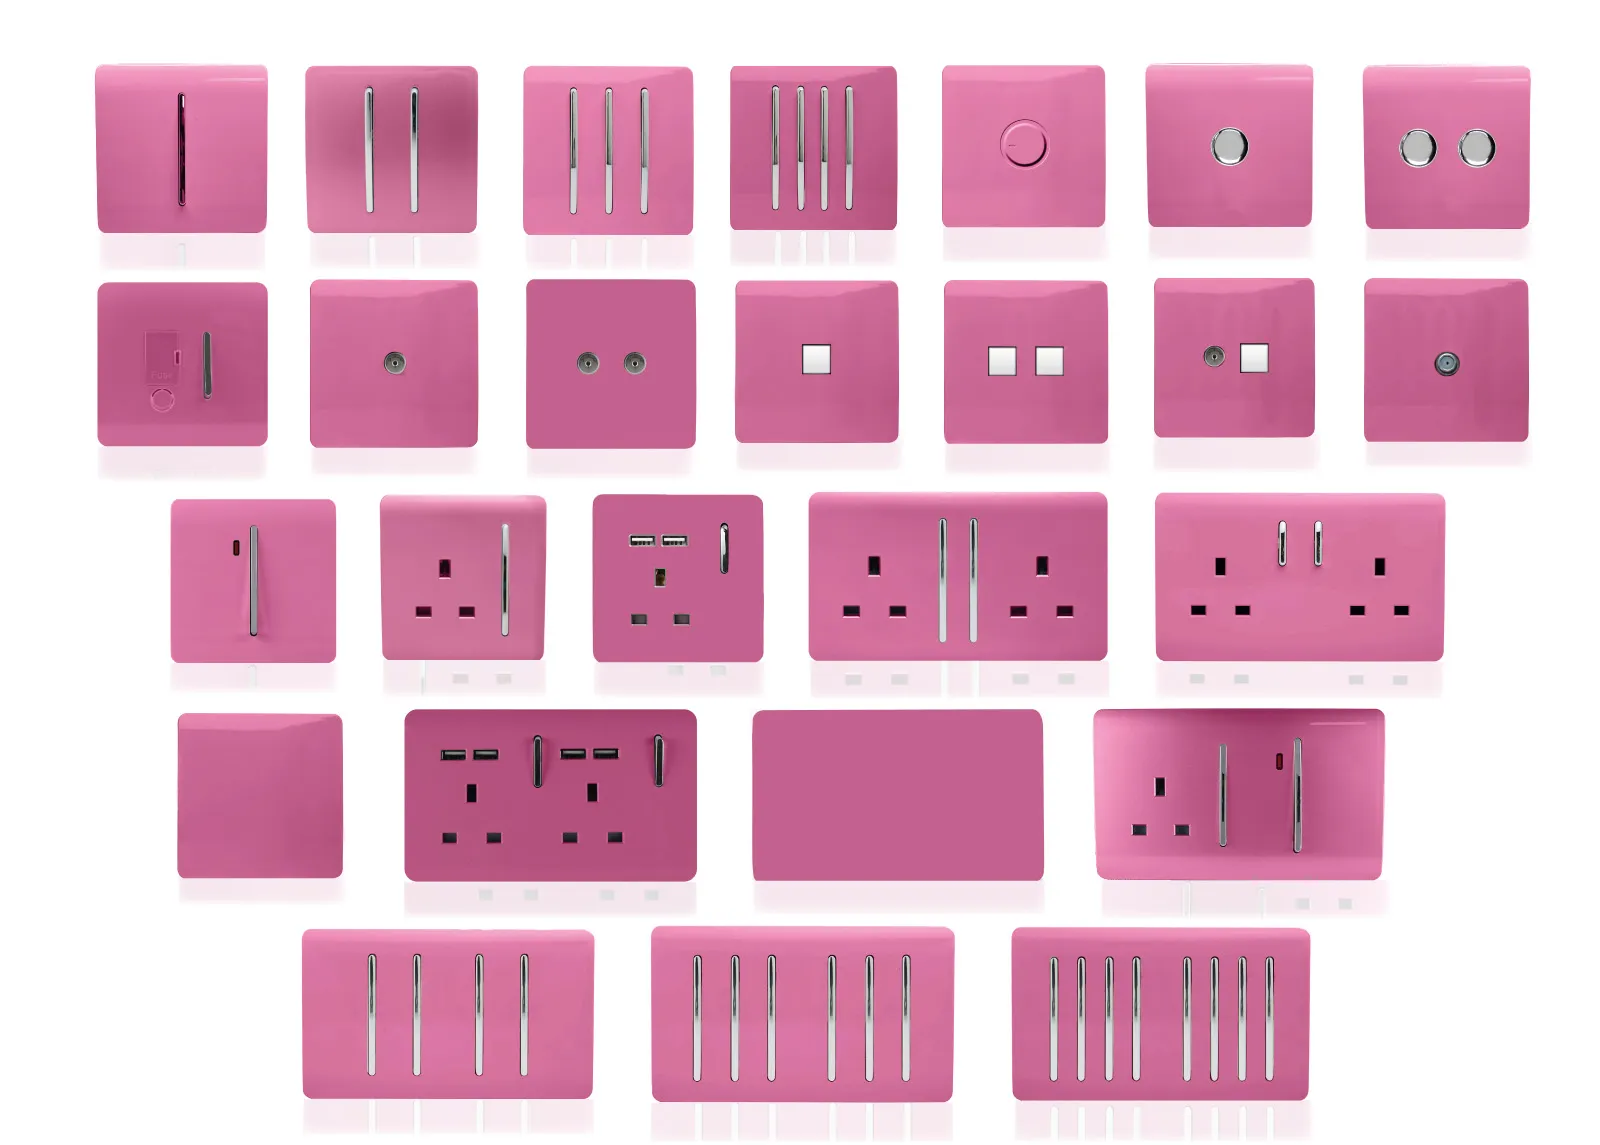 20 Amp Neon Insert Double Pole Switch Pink ART-WHS1PK  Trendi Pink